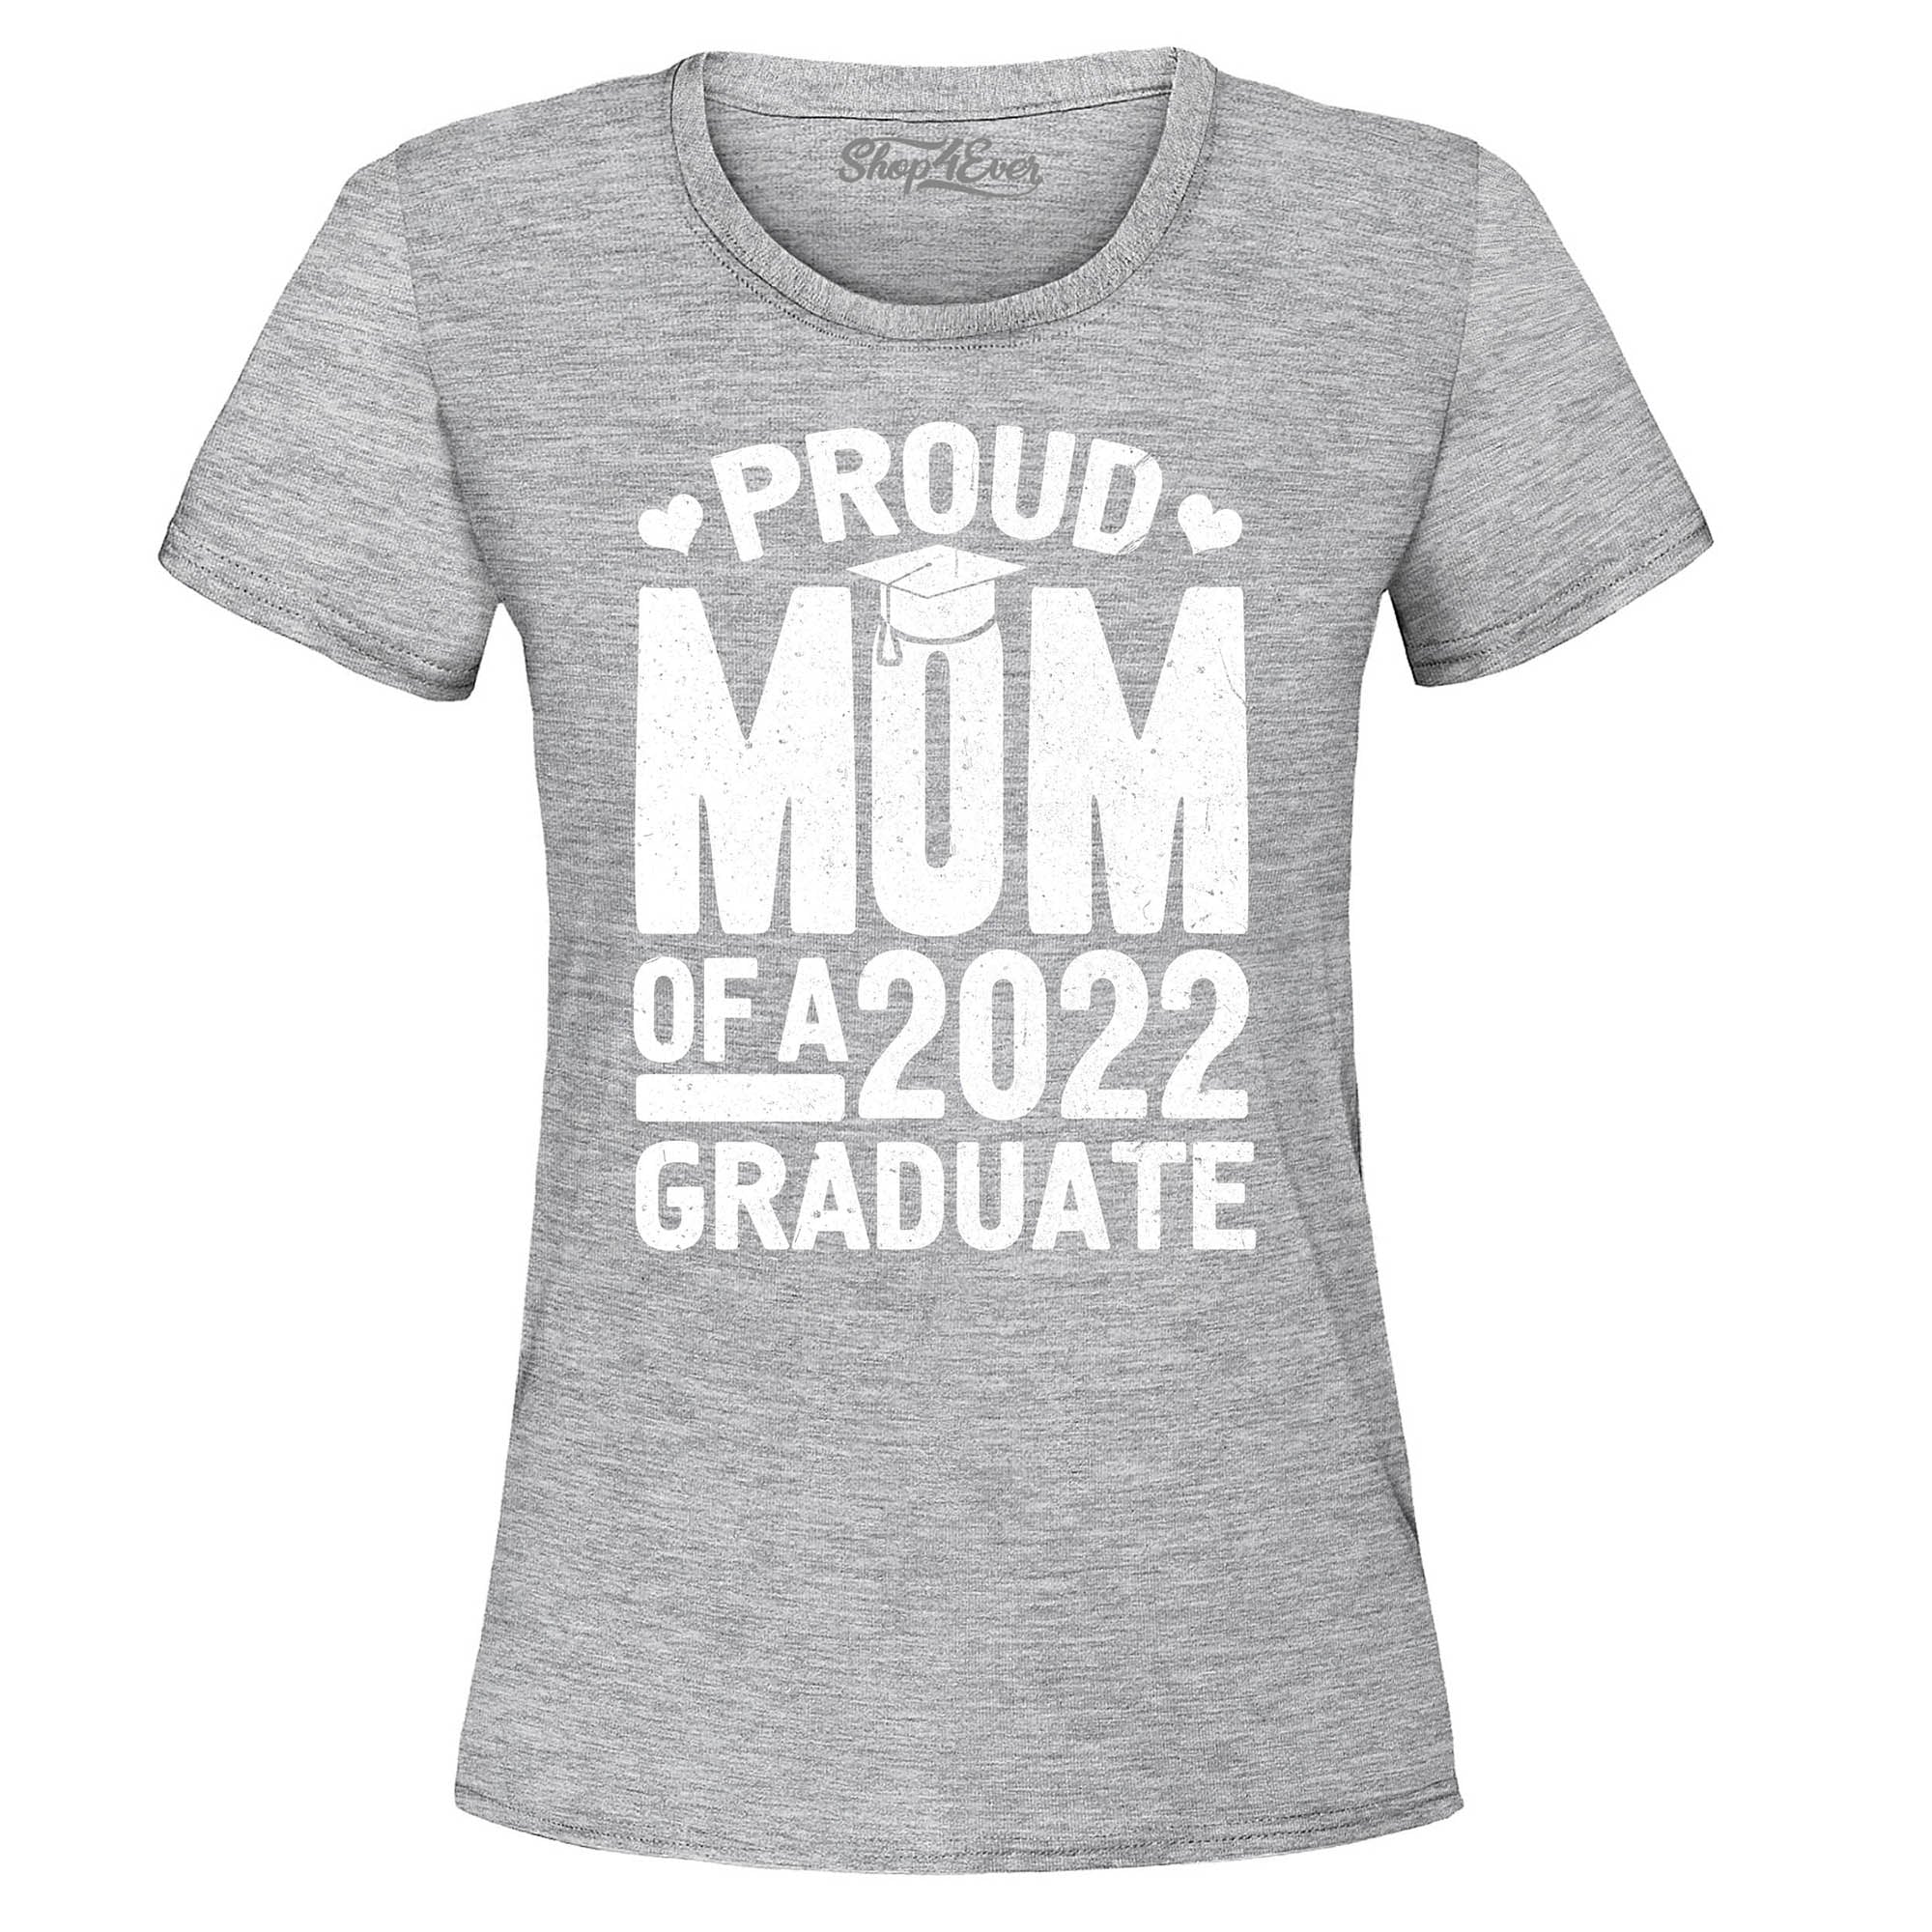 Proud Mom of a 2022 Graduate Graduation Women's T-Shirt